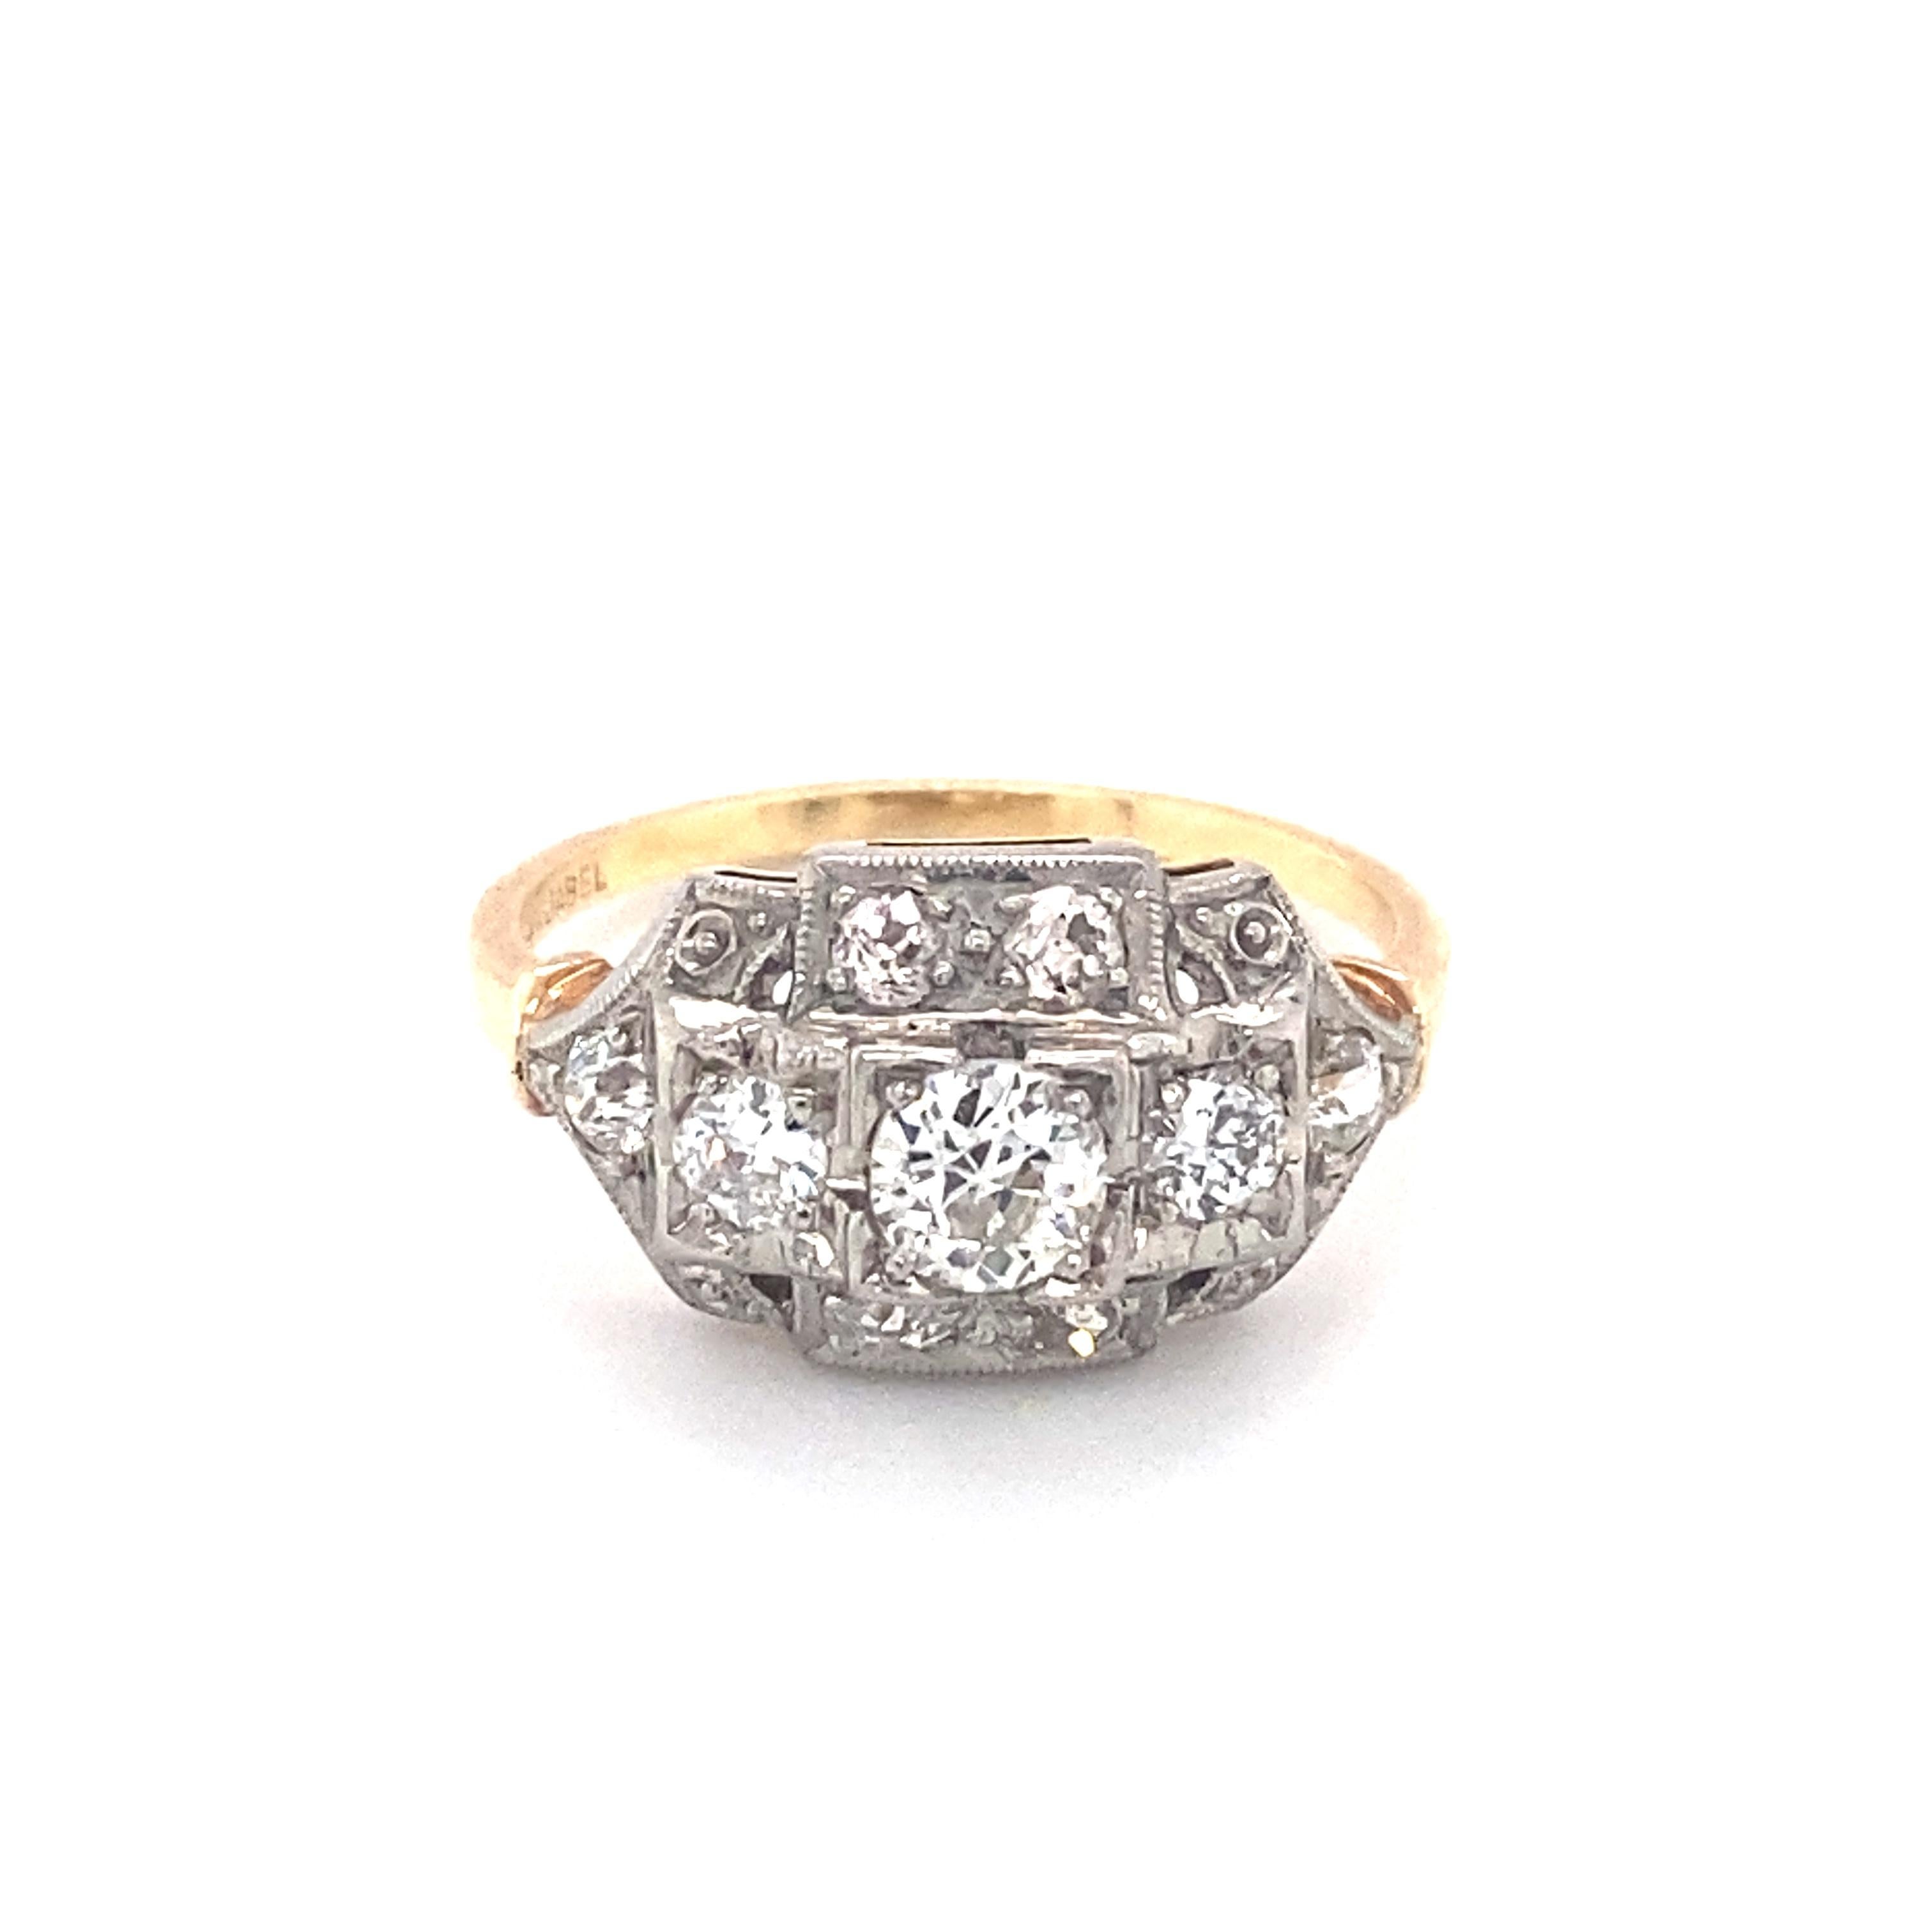 circa 1920s Art Deco Jabel 1 Carat Diamond Ring in Two Tone 14K Gold In Excellent Condition For Sale In Atlanta, GA